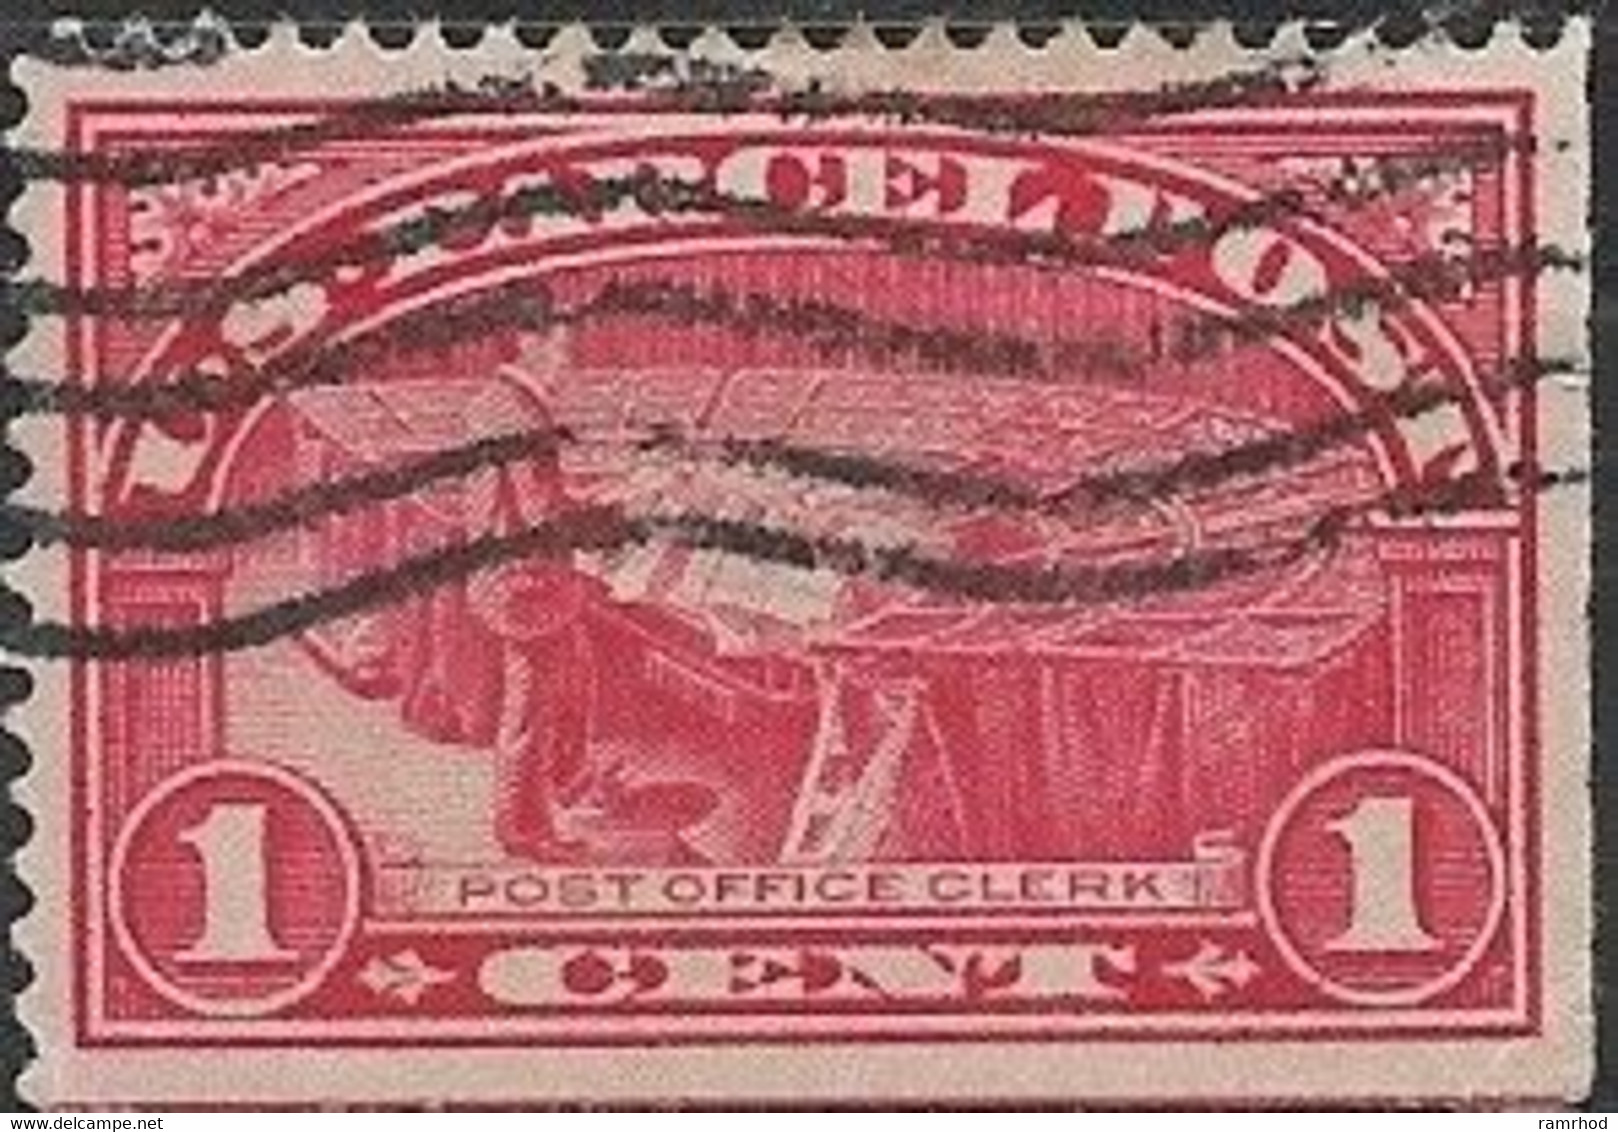 USA 1912 Parcel Post - Post Office Clerk - 1c. - Red FU - Parcel Post & Special Handling